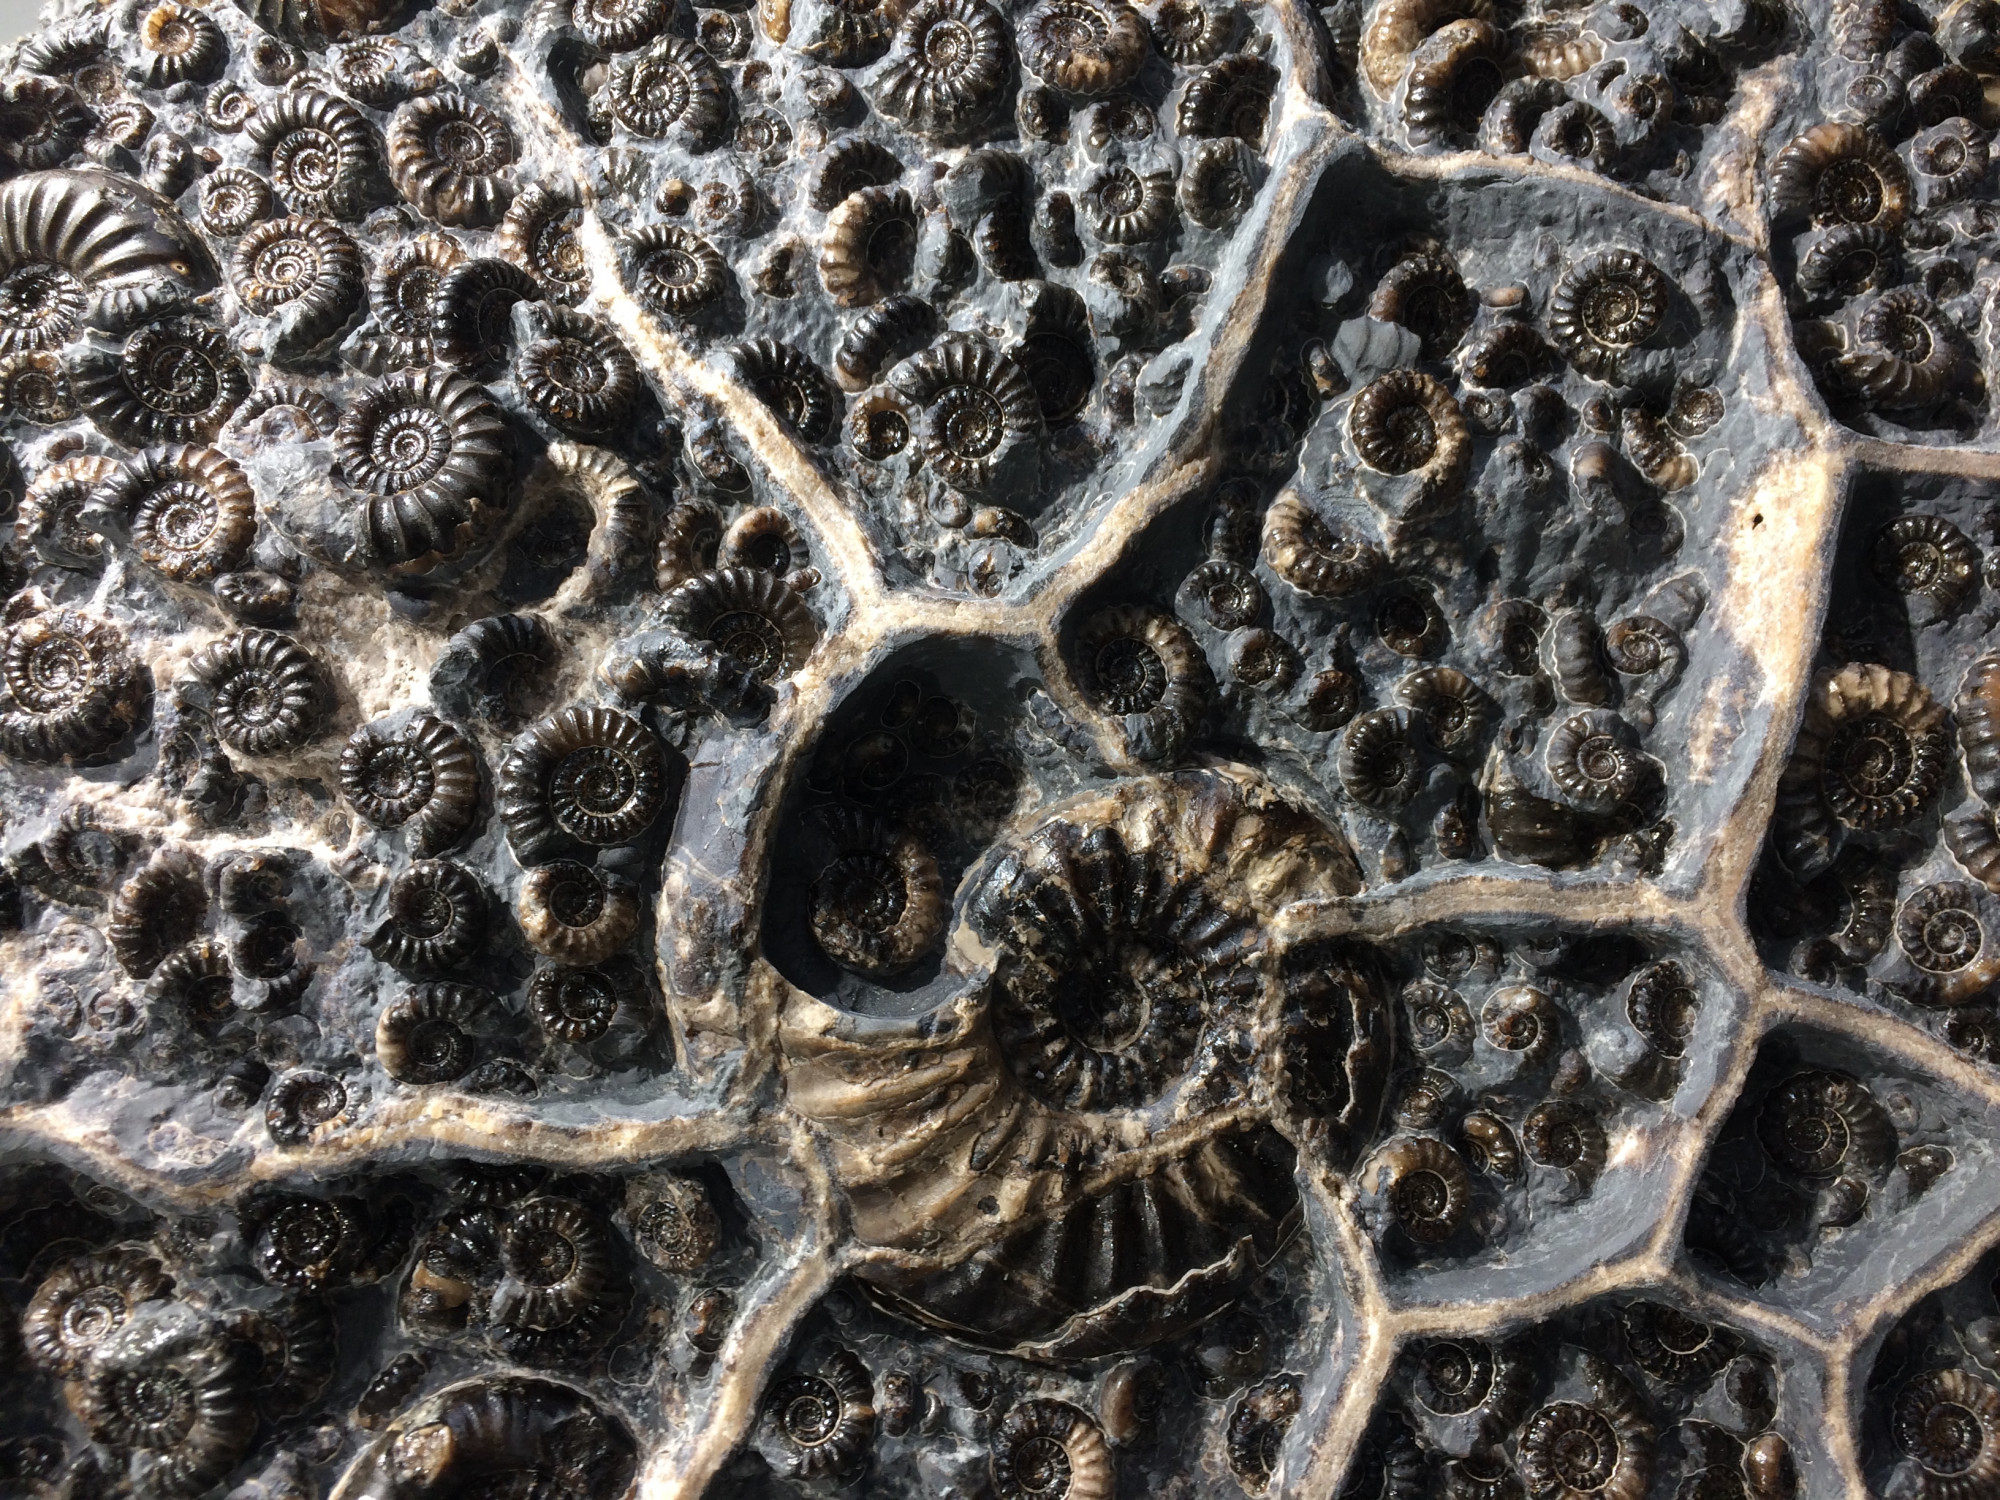 Ammonites from England